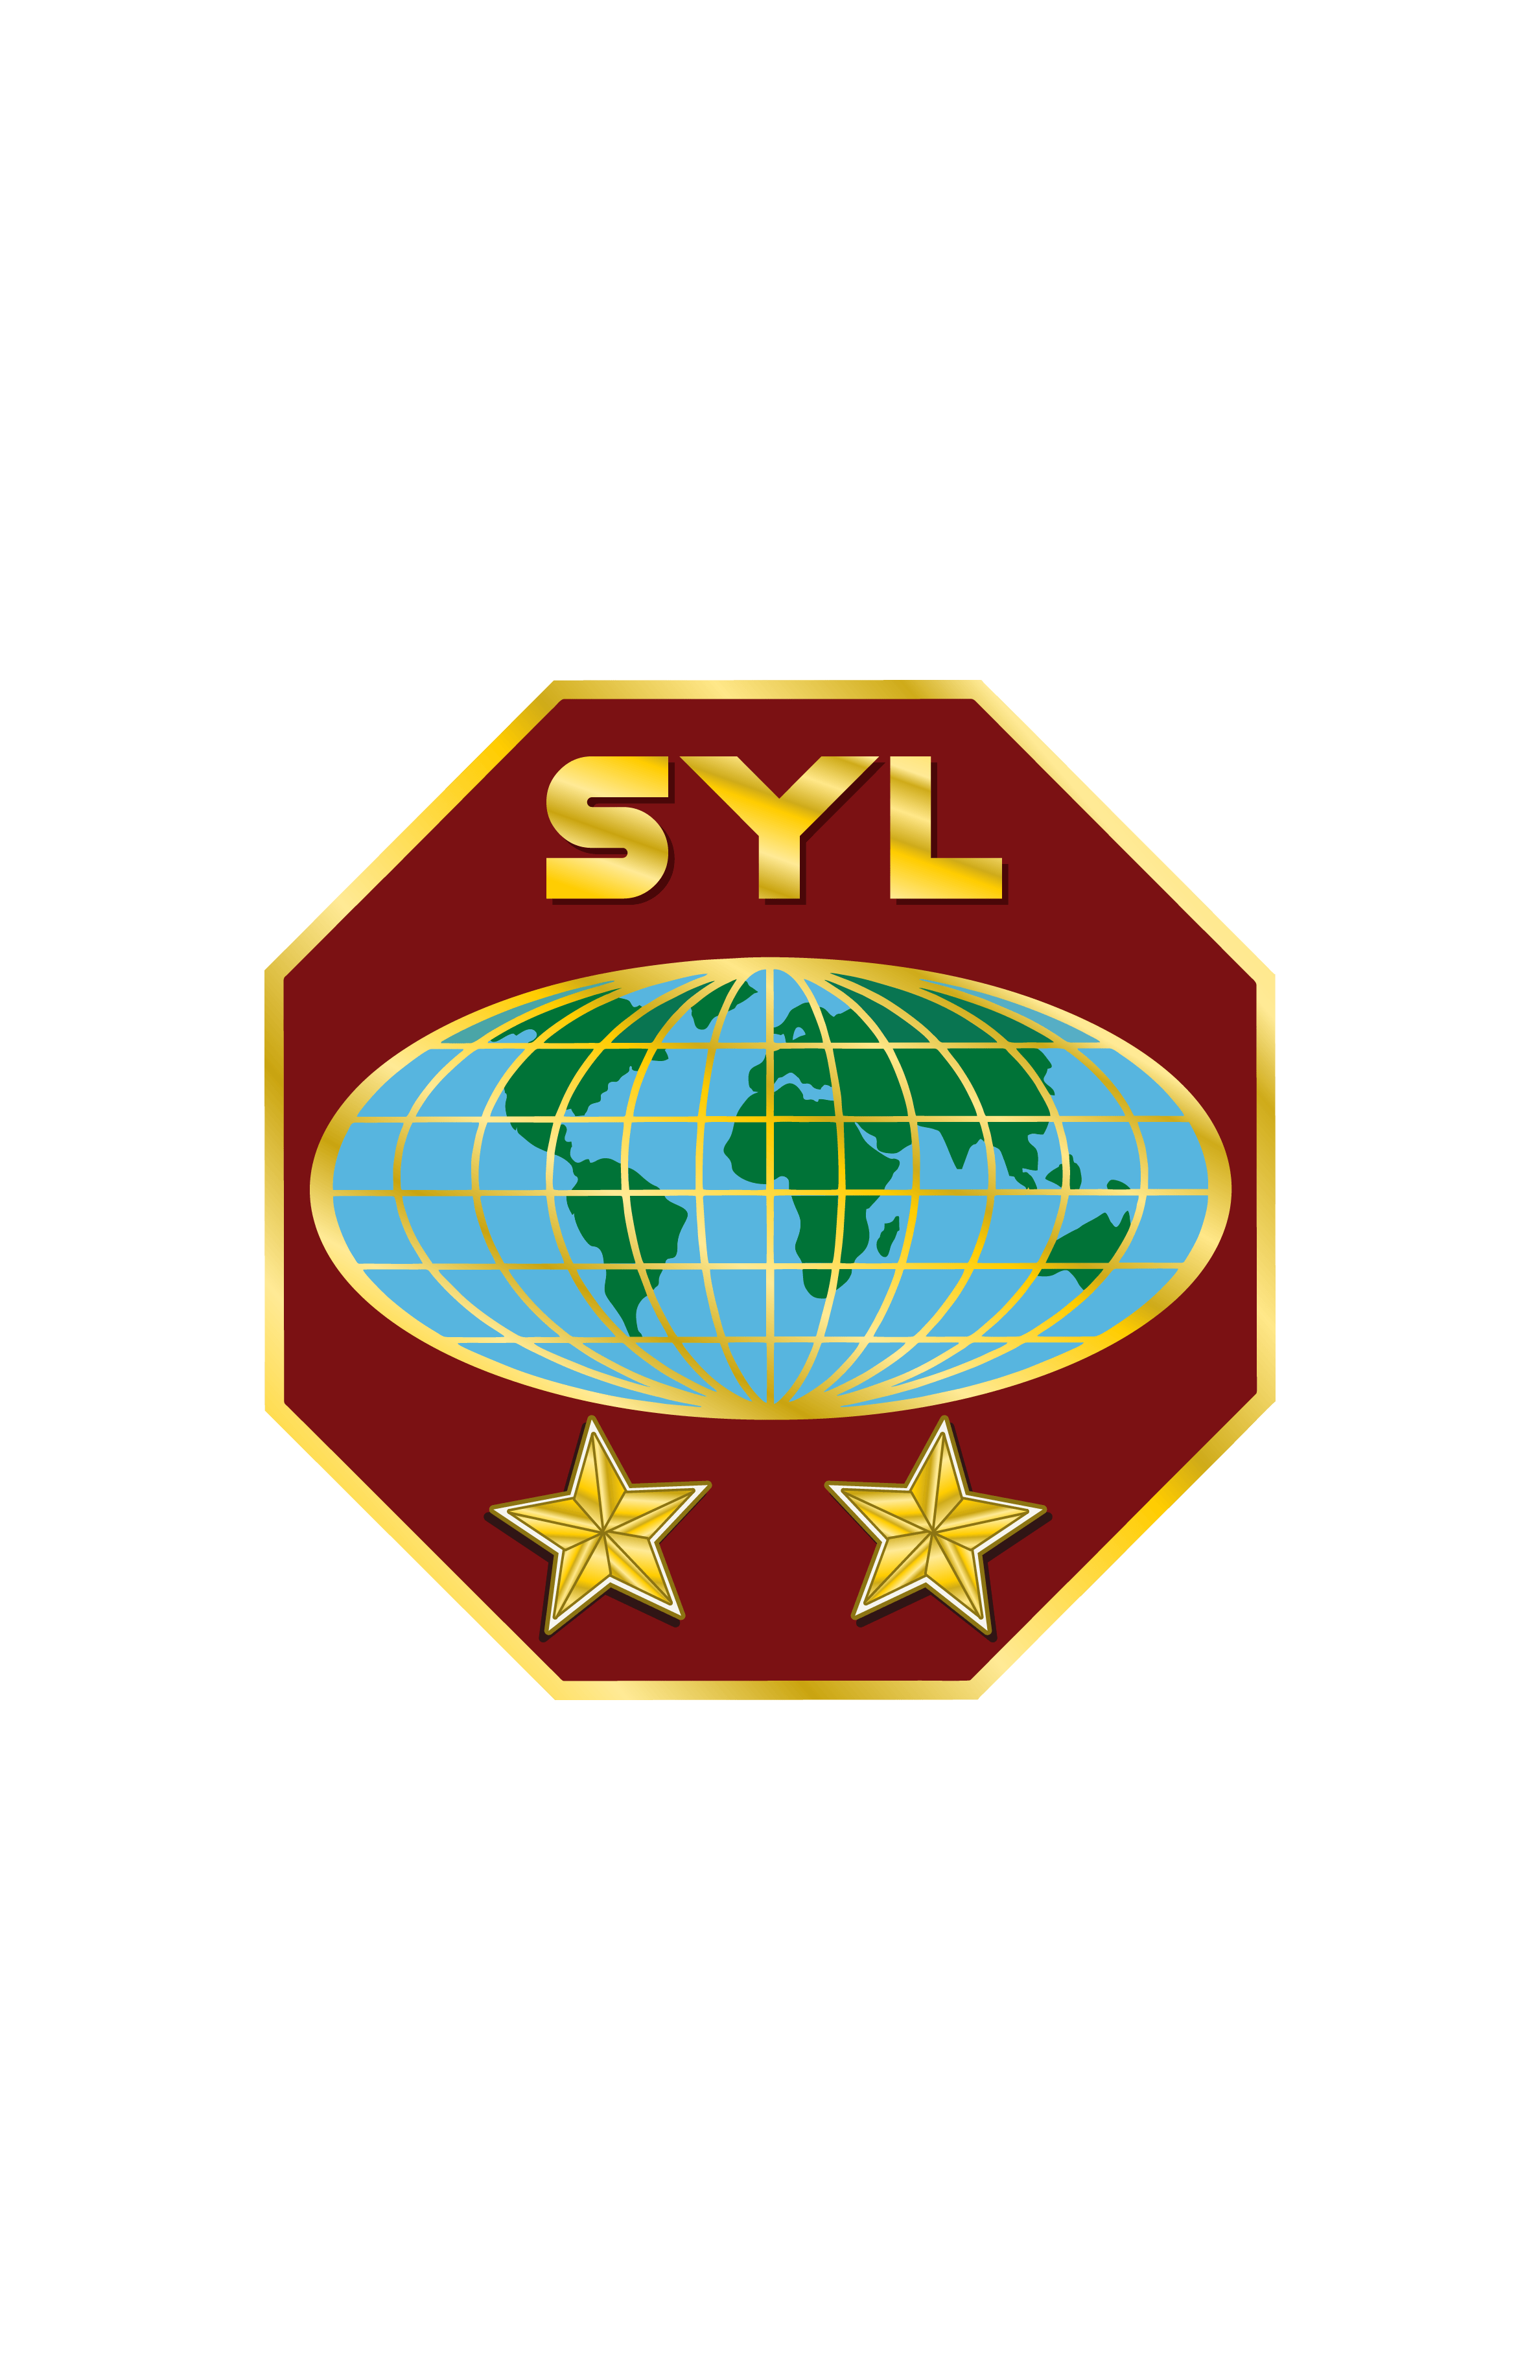 Syl Logo - Monrovia Central - Youth Ministries